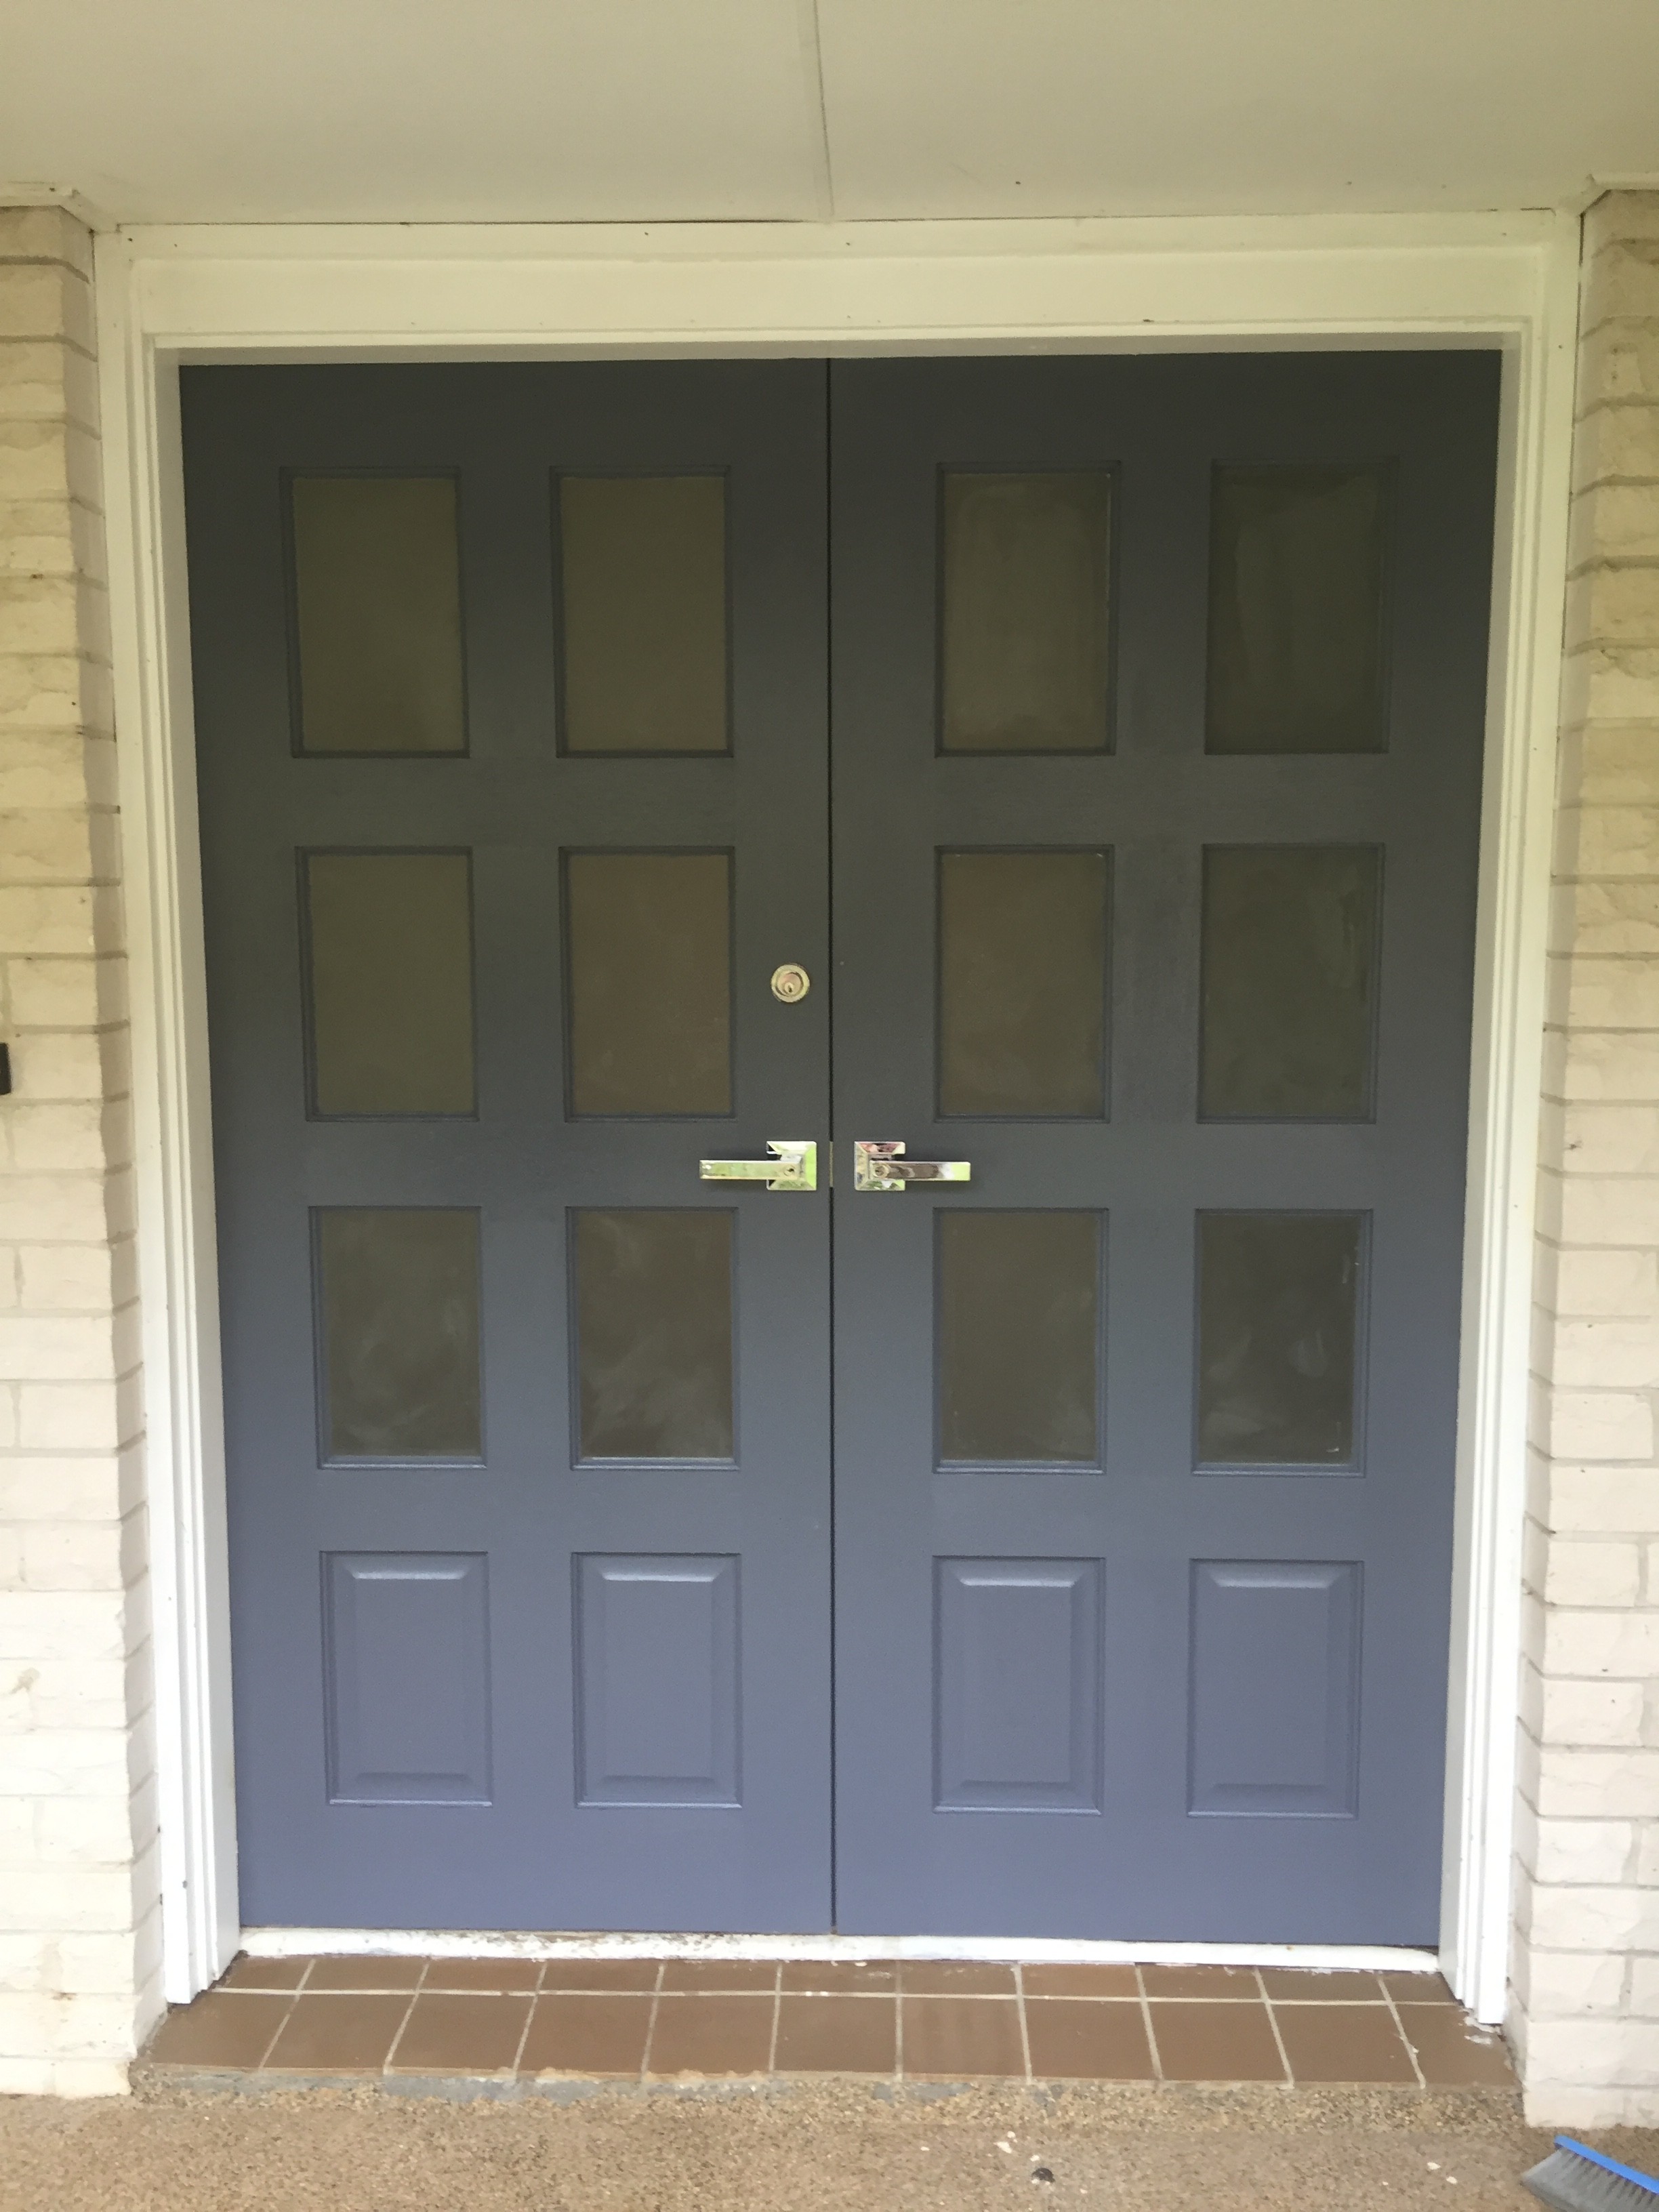 5 - New Entry Doors